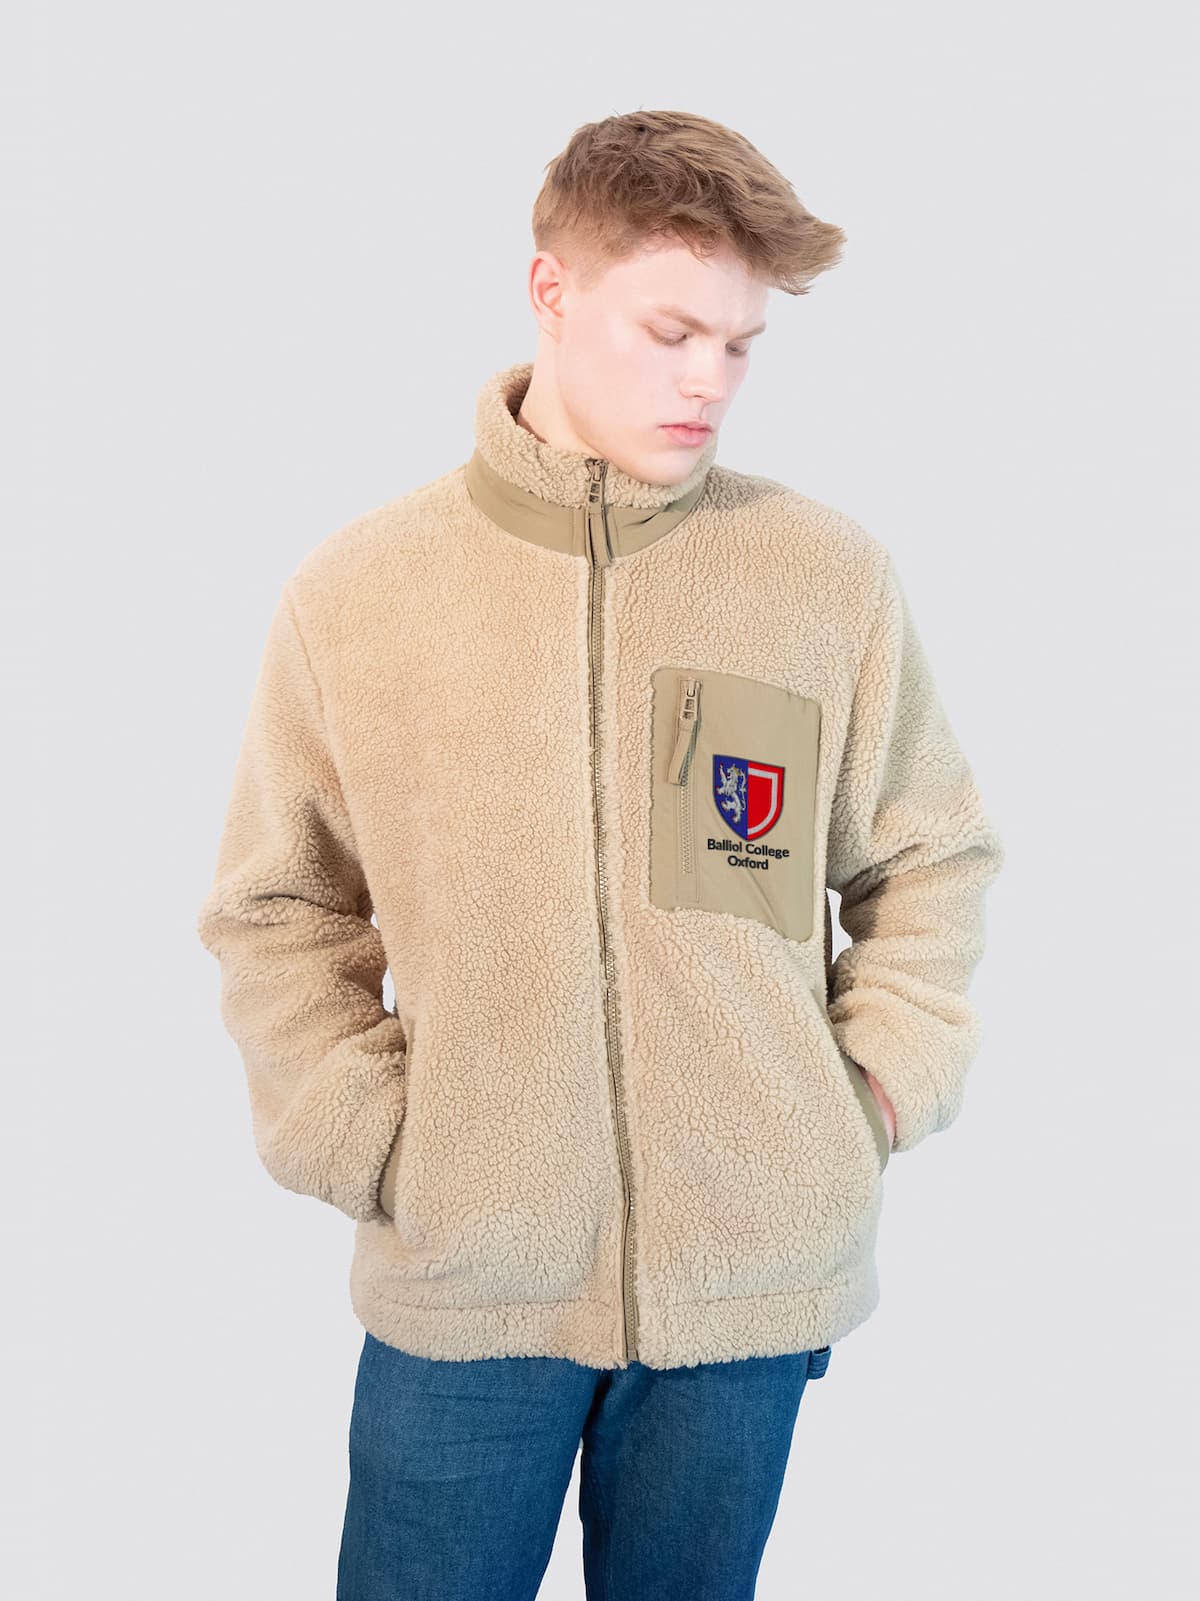 Balliol College Oxford Unisex Deep-Pile Sherpa Fleece Jacket